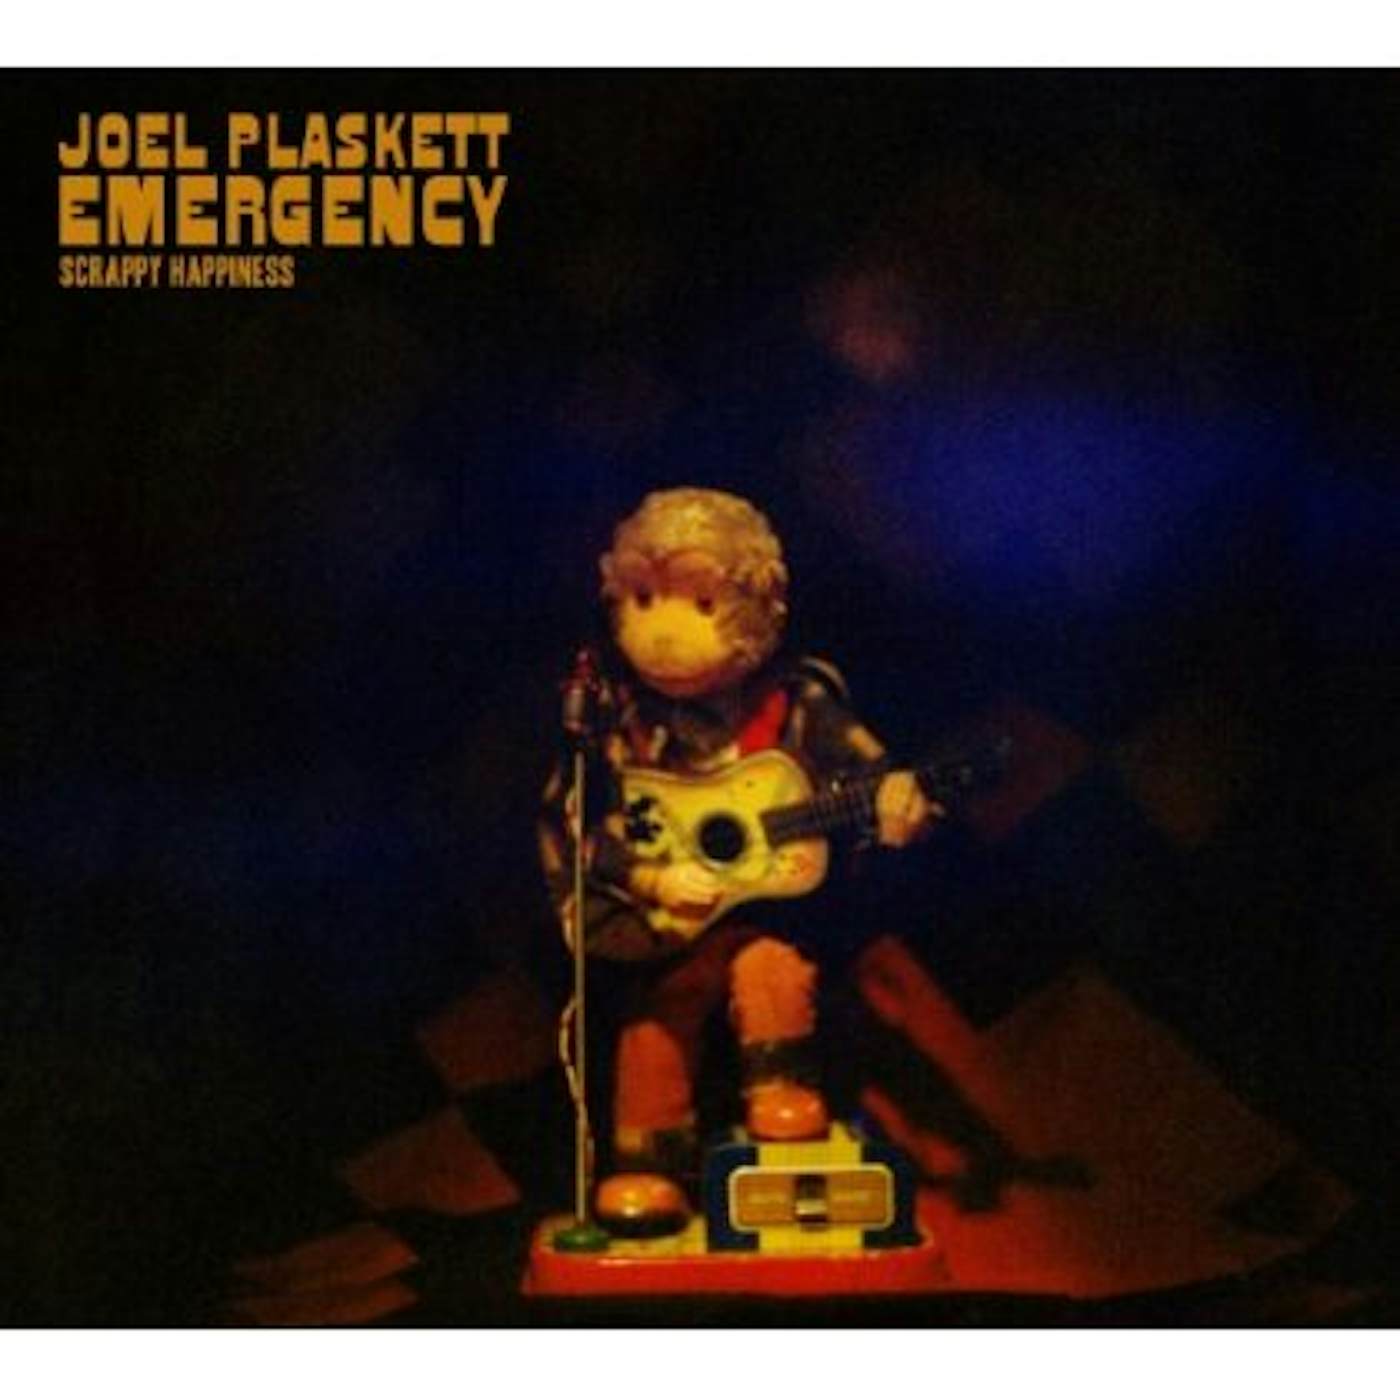 Joel Plaskett Emergency Scrappy Happiness Vinyl Record